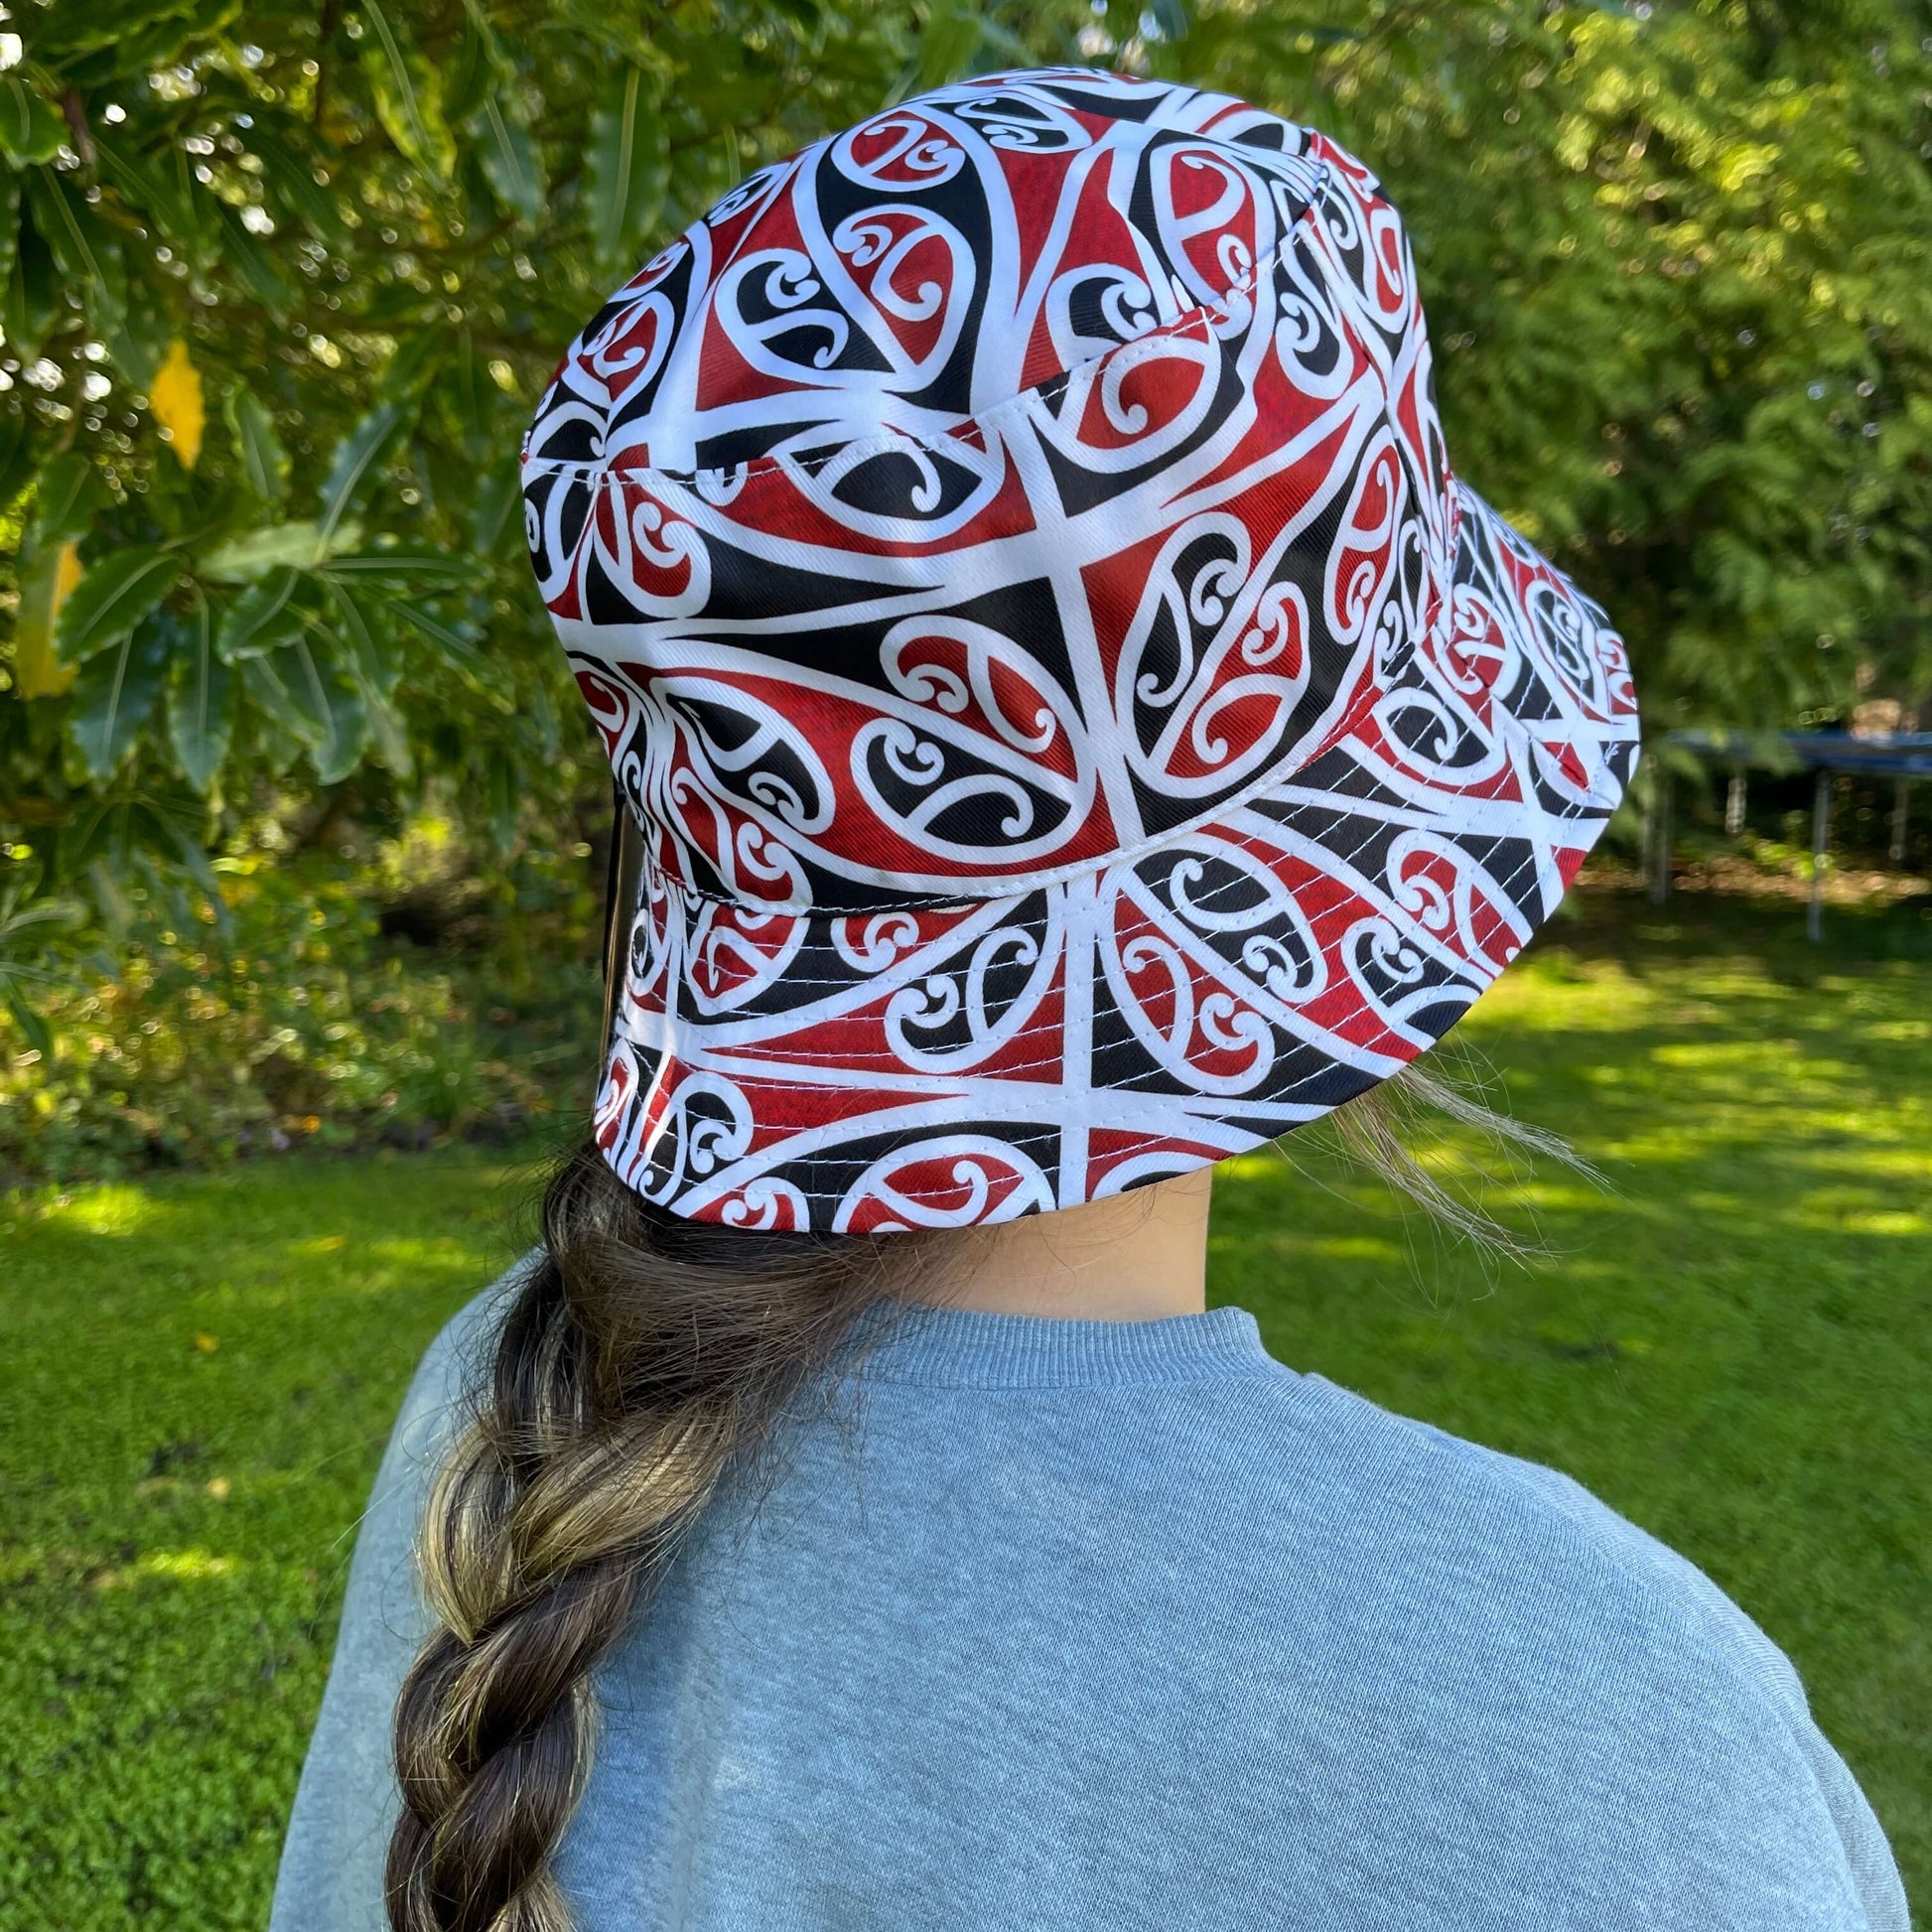 Girl wearing bucket hat with black, red & white maori koru design.